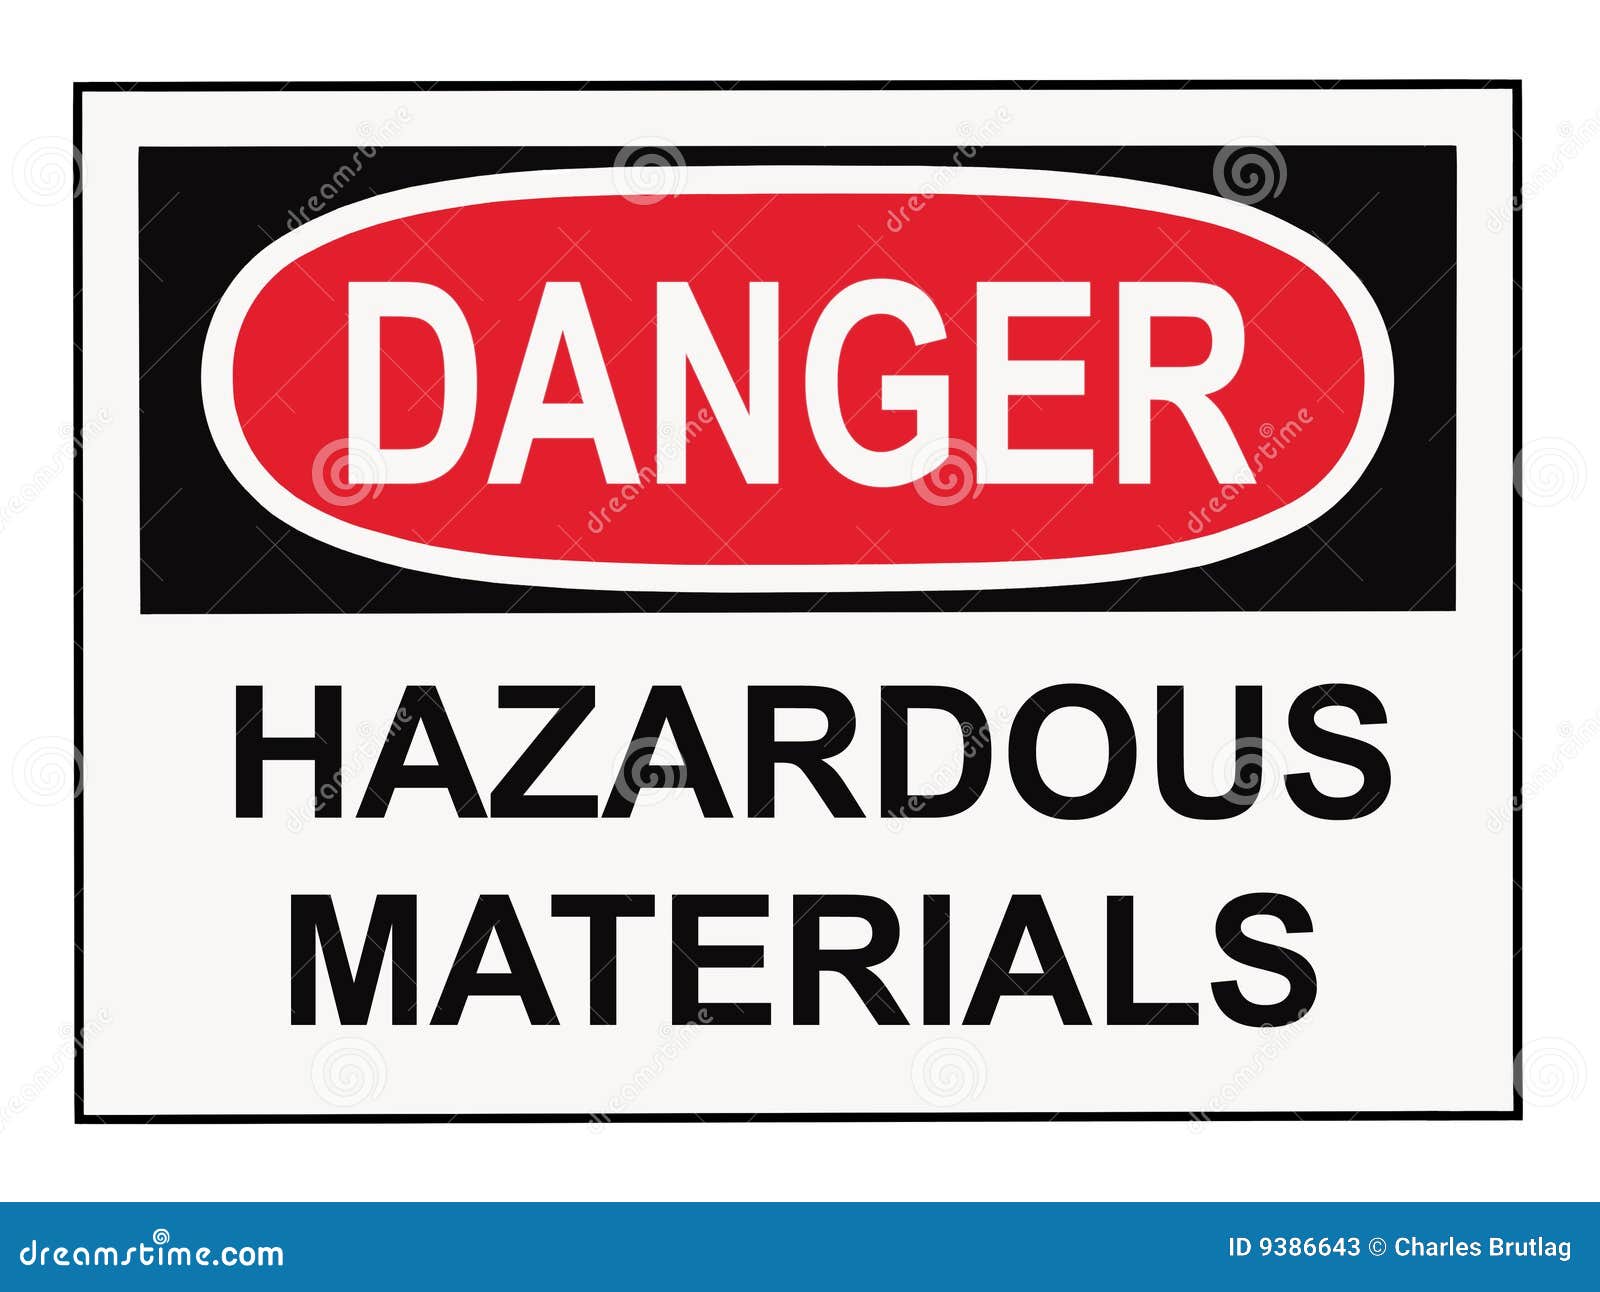 danger hazardous materials sign